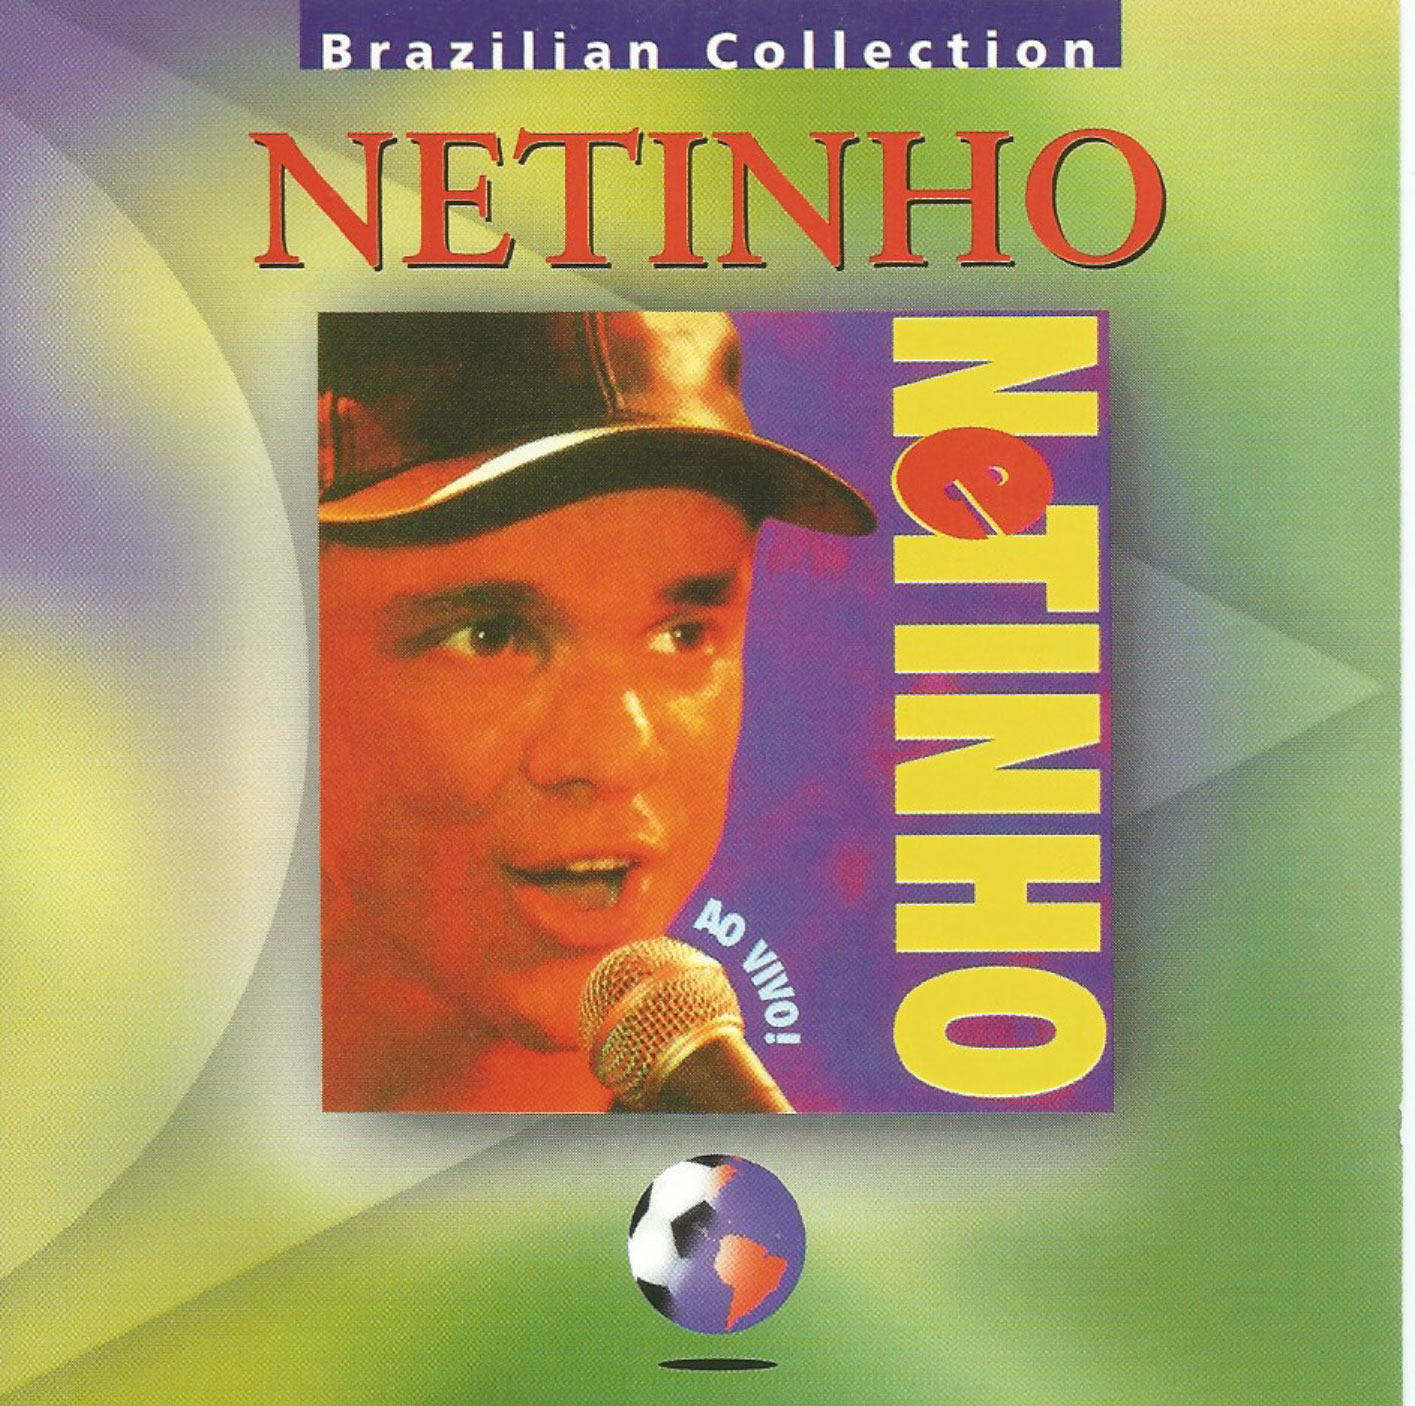 Brazillian Collection Netinho